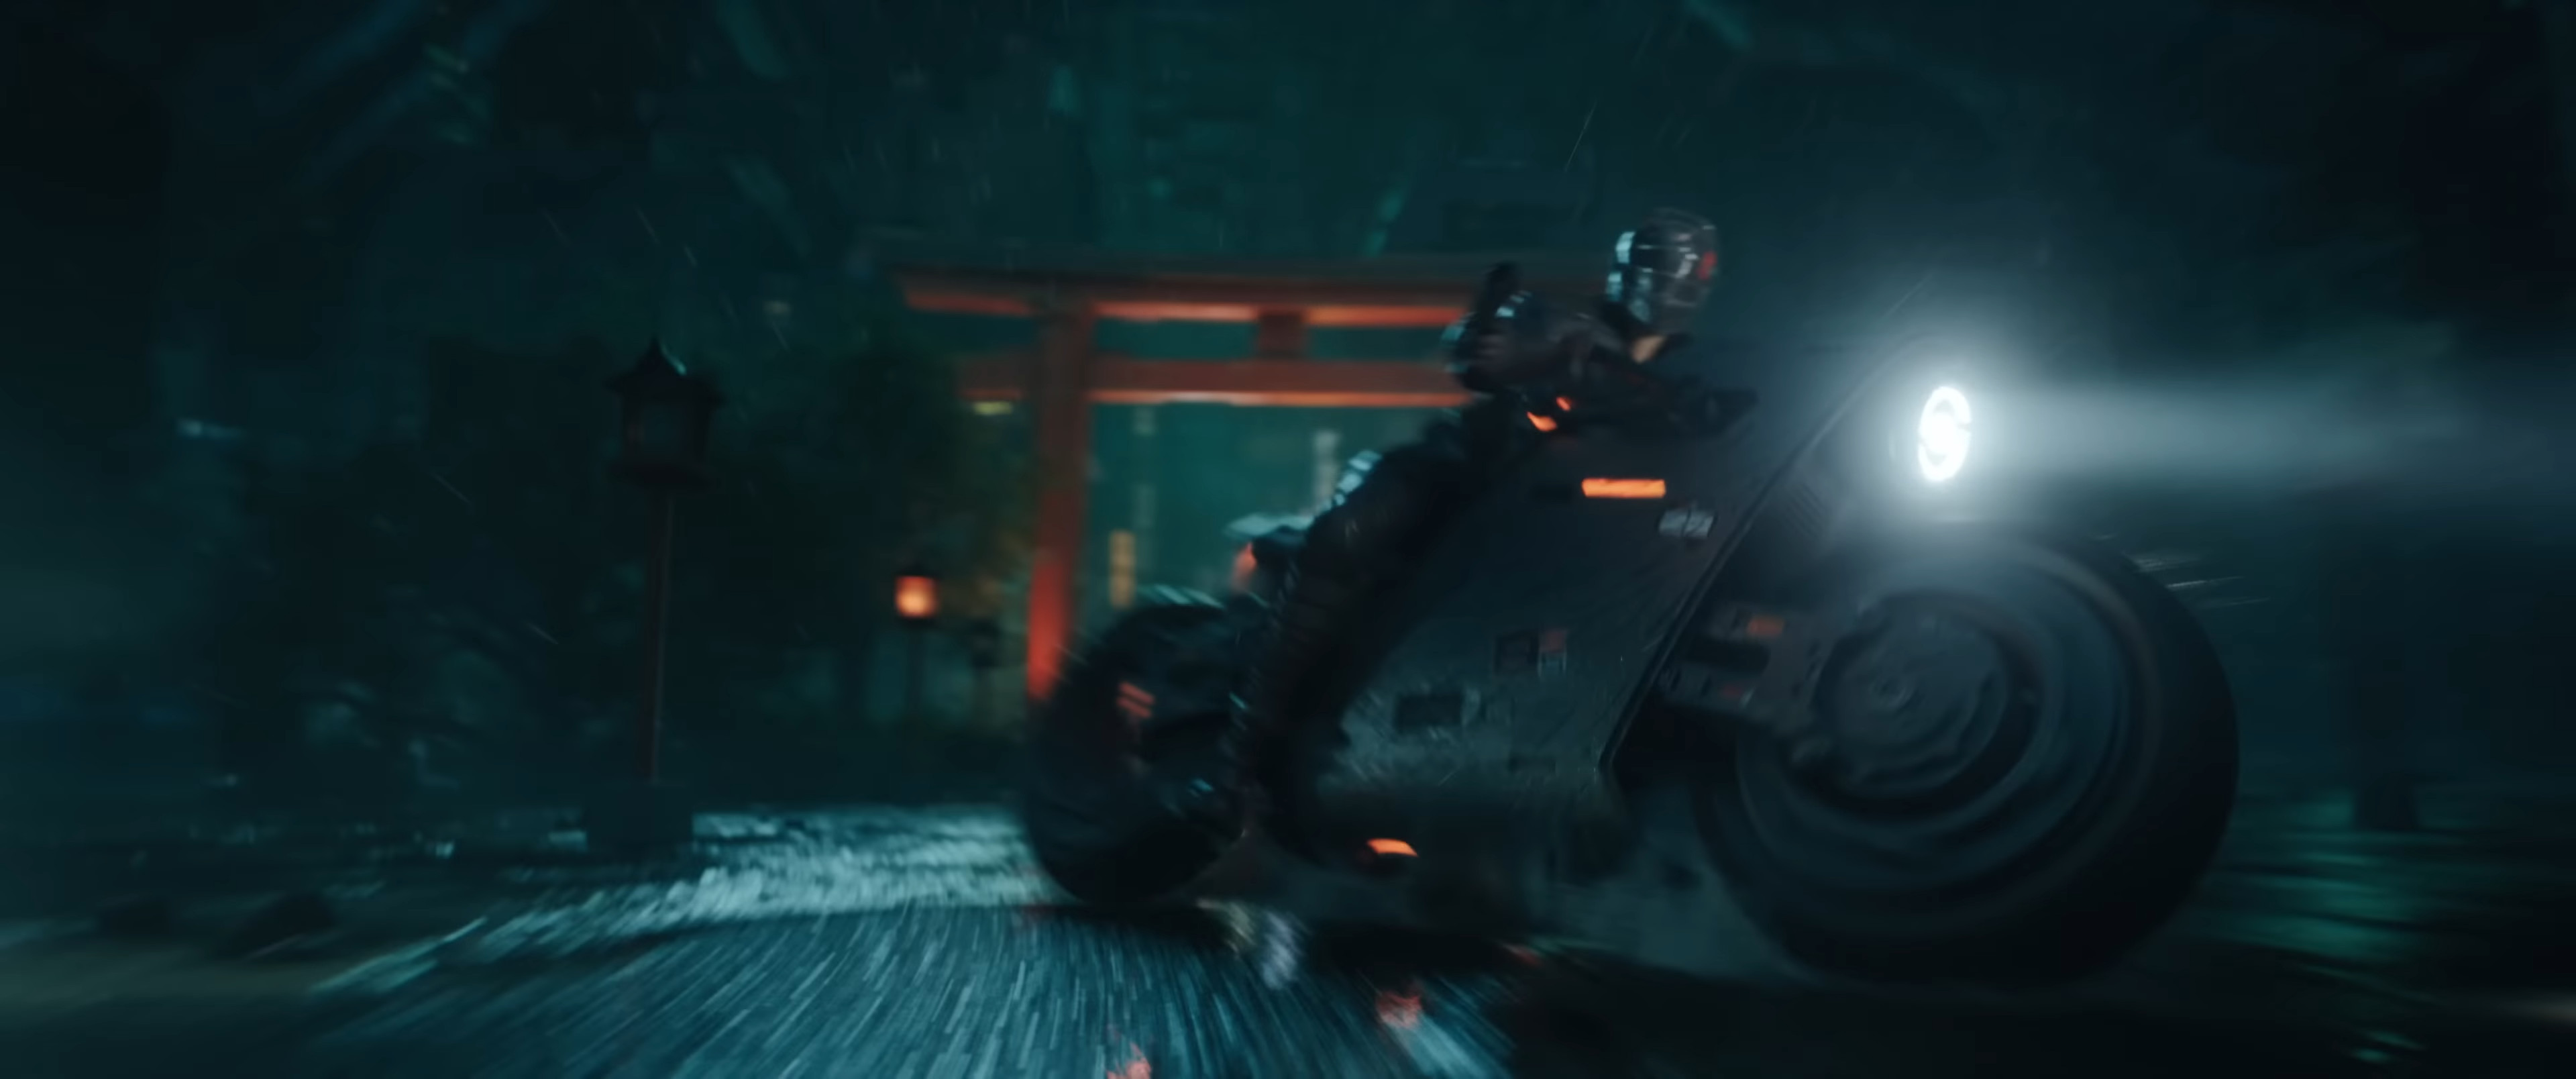 Trailer Screenshot - Bike in action